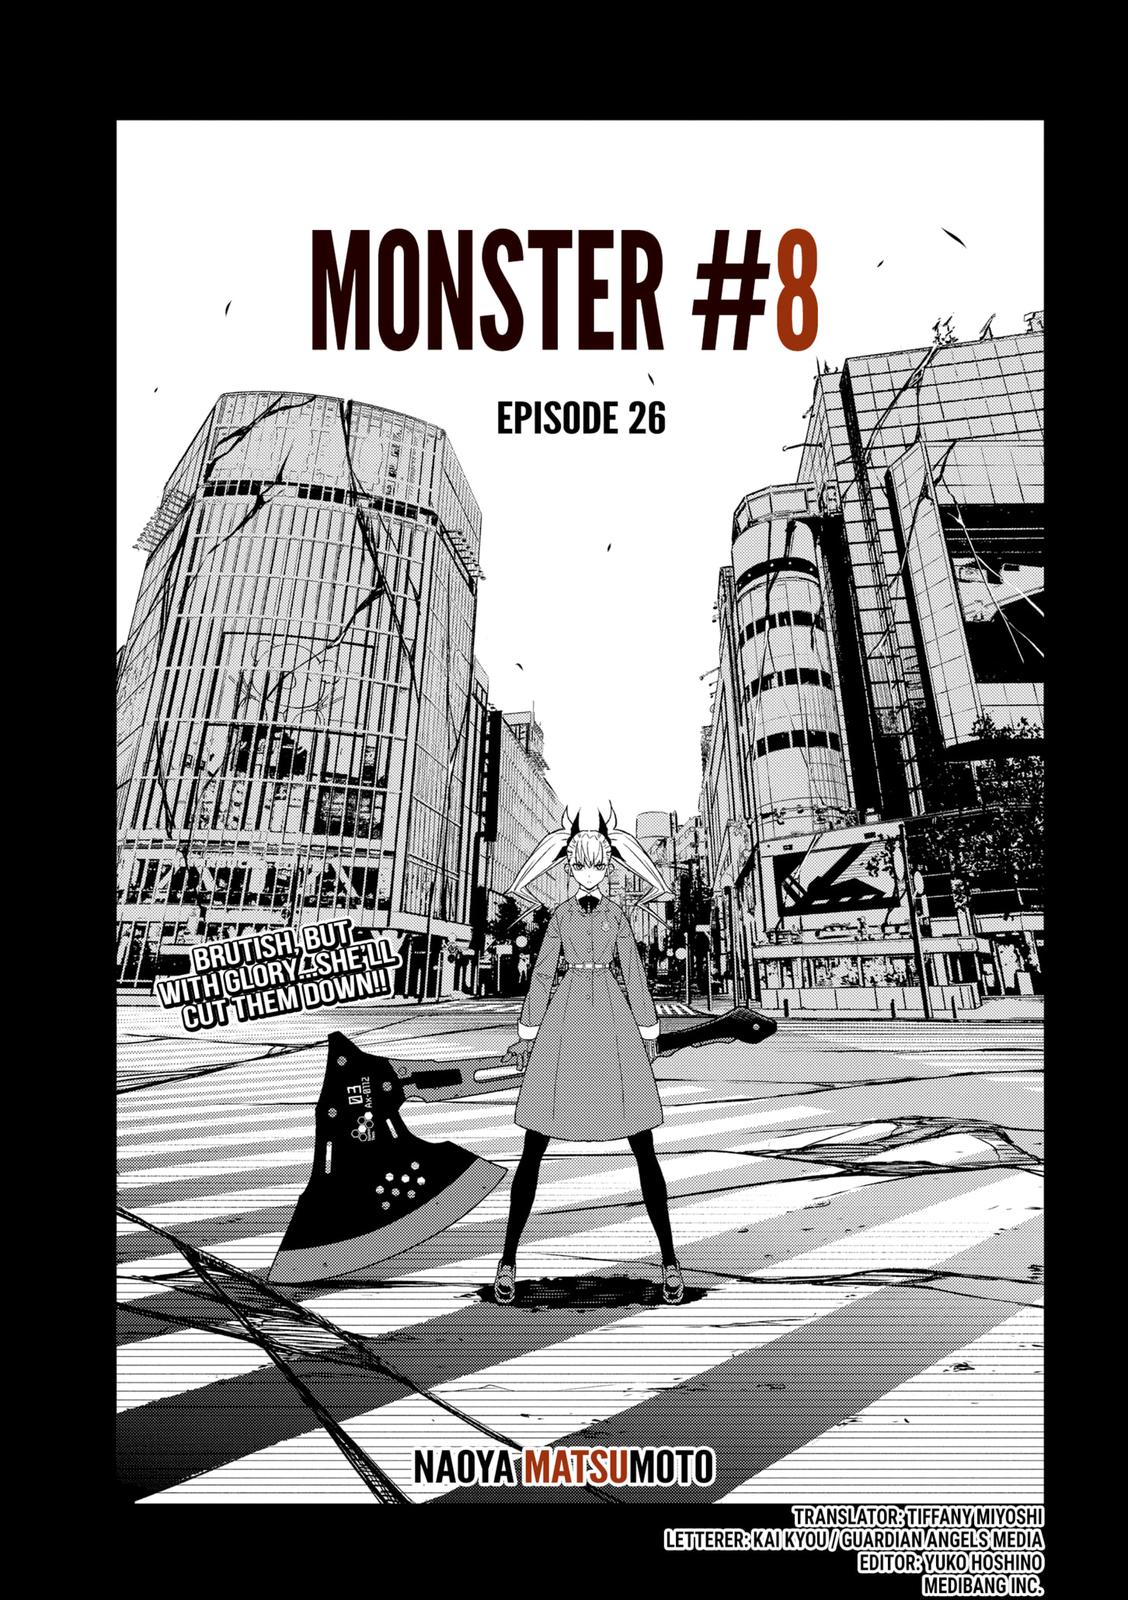 kaiju no 8,  kaiju no 8 manga online,  kaiju no 8 chapter,  monster 8,  monster 8 manga online,  monster 8 chapter,  kaiju 8,  kaiju number 8,  kaiju no 8 chapter 9,  kaiju 8 manga,  manga kaiju no 8,  kaijuu no 8 manga,  kaiju no 8 chapter 7,  kaiju no 8 novel,  kaiju no 8 online,  kaiju no 8 english,  kaiju no 8 light novel,  kaiju no 8 manga read,  kaiju no 8 ch 4,  hibino kafka,  monster number 8 manga,  kaiju no 8 review,  monster no8,  kaiju no 8 ch 8,  read kaiju no 8 manga,  manga 8 kaiju,  kaiju no 8 vol 1,  8 monster,  kaiju 8 anime,  kaiju no 8 manga english,  kaiju no 8 read manga,  kaiju no 8 ch 15,  anime kaiju no 8,  kaiju no 8 amazon,  kaiju no 8 manga volume 1,  kaiju 8 manga plus,  monster 08,  kaiju no 8 manga book,  kaiju no 8 volume 1 english,  kaiju no 8 physical copy,  kaiju no 8 manga,  kaiju no 8 chapter 4,  kaiju no 8 read online,  kaiju no 8 chapter 1,  kaiju no 8 anime,  kaiju no 8 mangadex,  kaiju no 8 reddit,  kaiju no 8 read,  kaiju no 8 viz,  read kaiju no 8,  monster 8 wiki,  monster 8 characters,  monster 8 light novel,  kaiju no 8 wiki,  monster 8 chapter 4,  monster #8 characters,  kaiju no 8 volume 1,  monster 8 chapter 2,  kaiju no 8 mangaplus,  monster #8 read online,  monster 8 pack,  monster #8 wiki,  monster 8 gauge speaker wire,  monster #8 raws,  monster #8 light novel,  monster 8 outlet surge protector,  monster 8 anime,  monster 8' 4k hdmi cable,  monster 8 viz,  baffin monster 8,  read monster 8,  monster 821,  monster 821 review,  monster 8k hdmi cable,  monster 821 specs,  monster 821 for sale,  monster 821 price,  monster 821 vs 1200,  monster 821 exhaust,  monsterland episode 8,  monster no 8,  monstercat uncaged vol 8,  monster truck 1/8,  monster arena dragon quest 8,  monster locations dragon quest 8, 